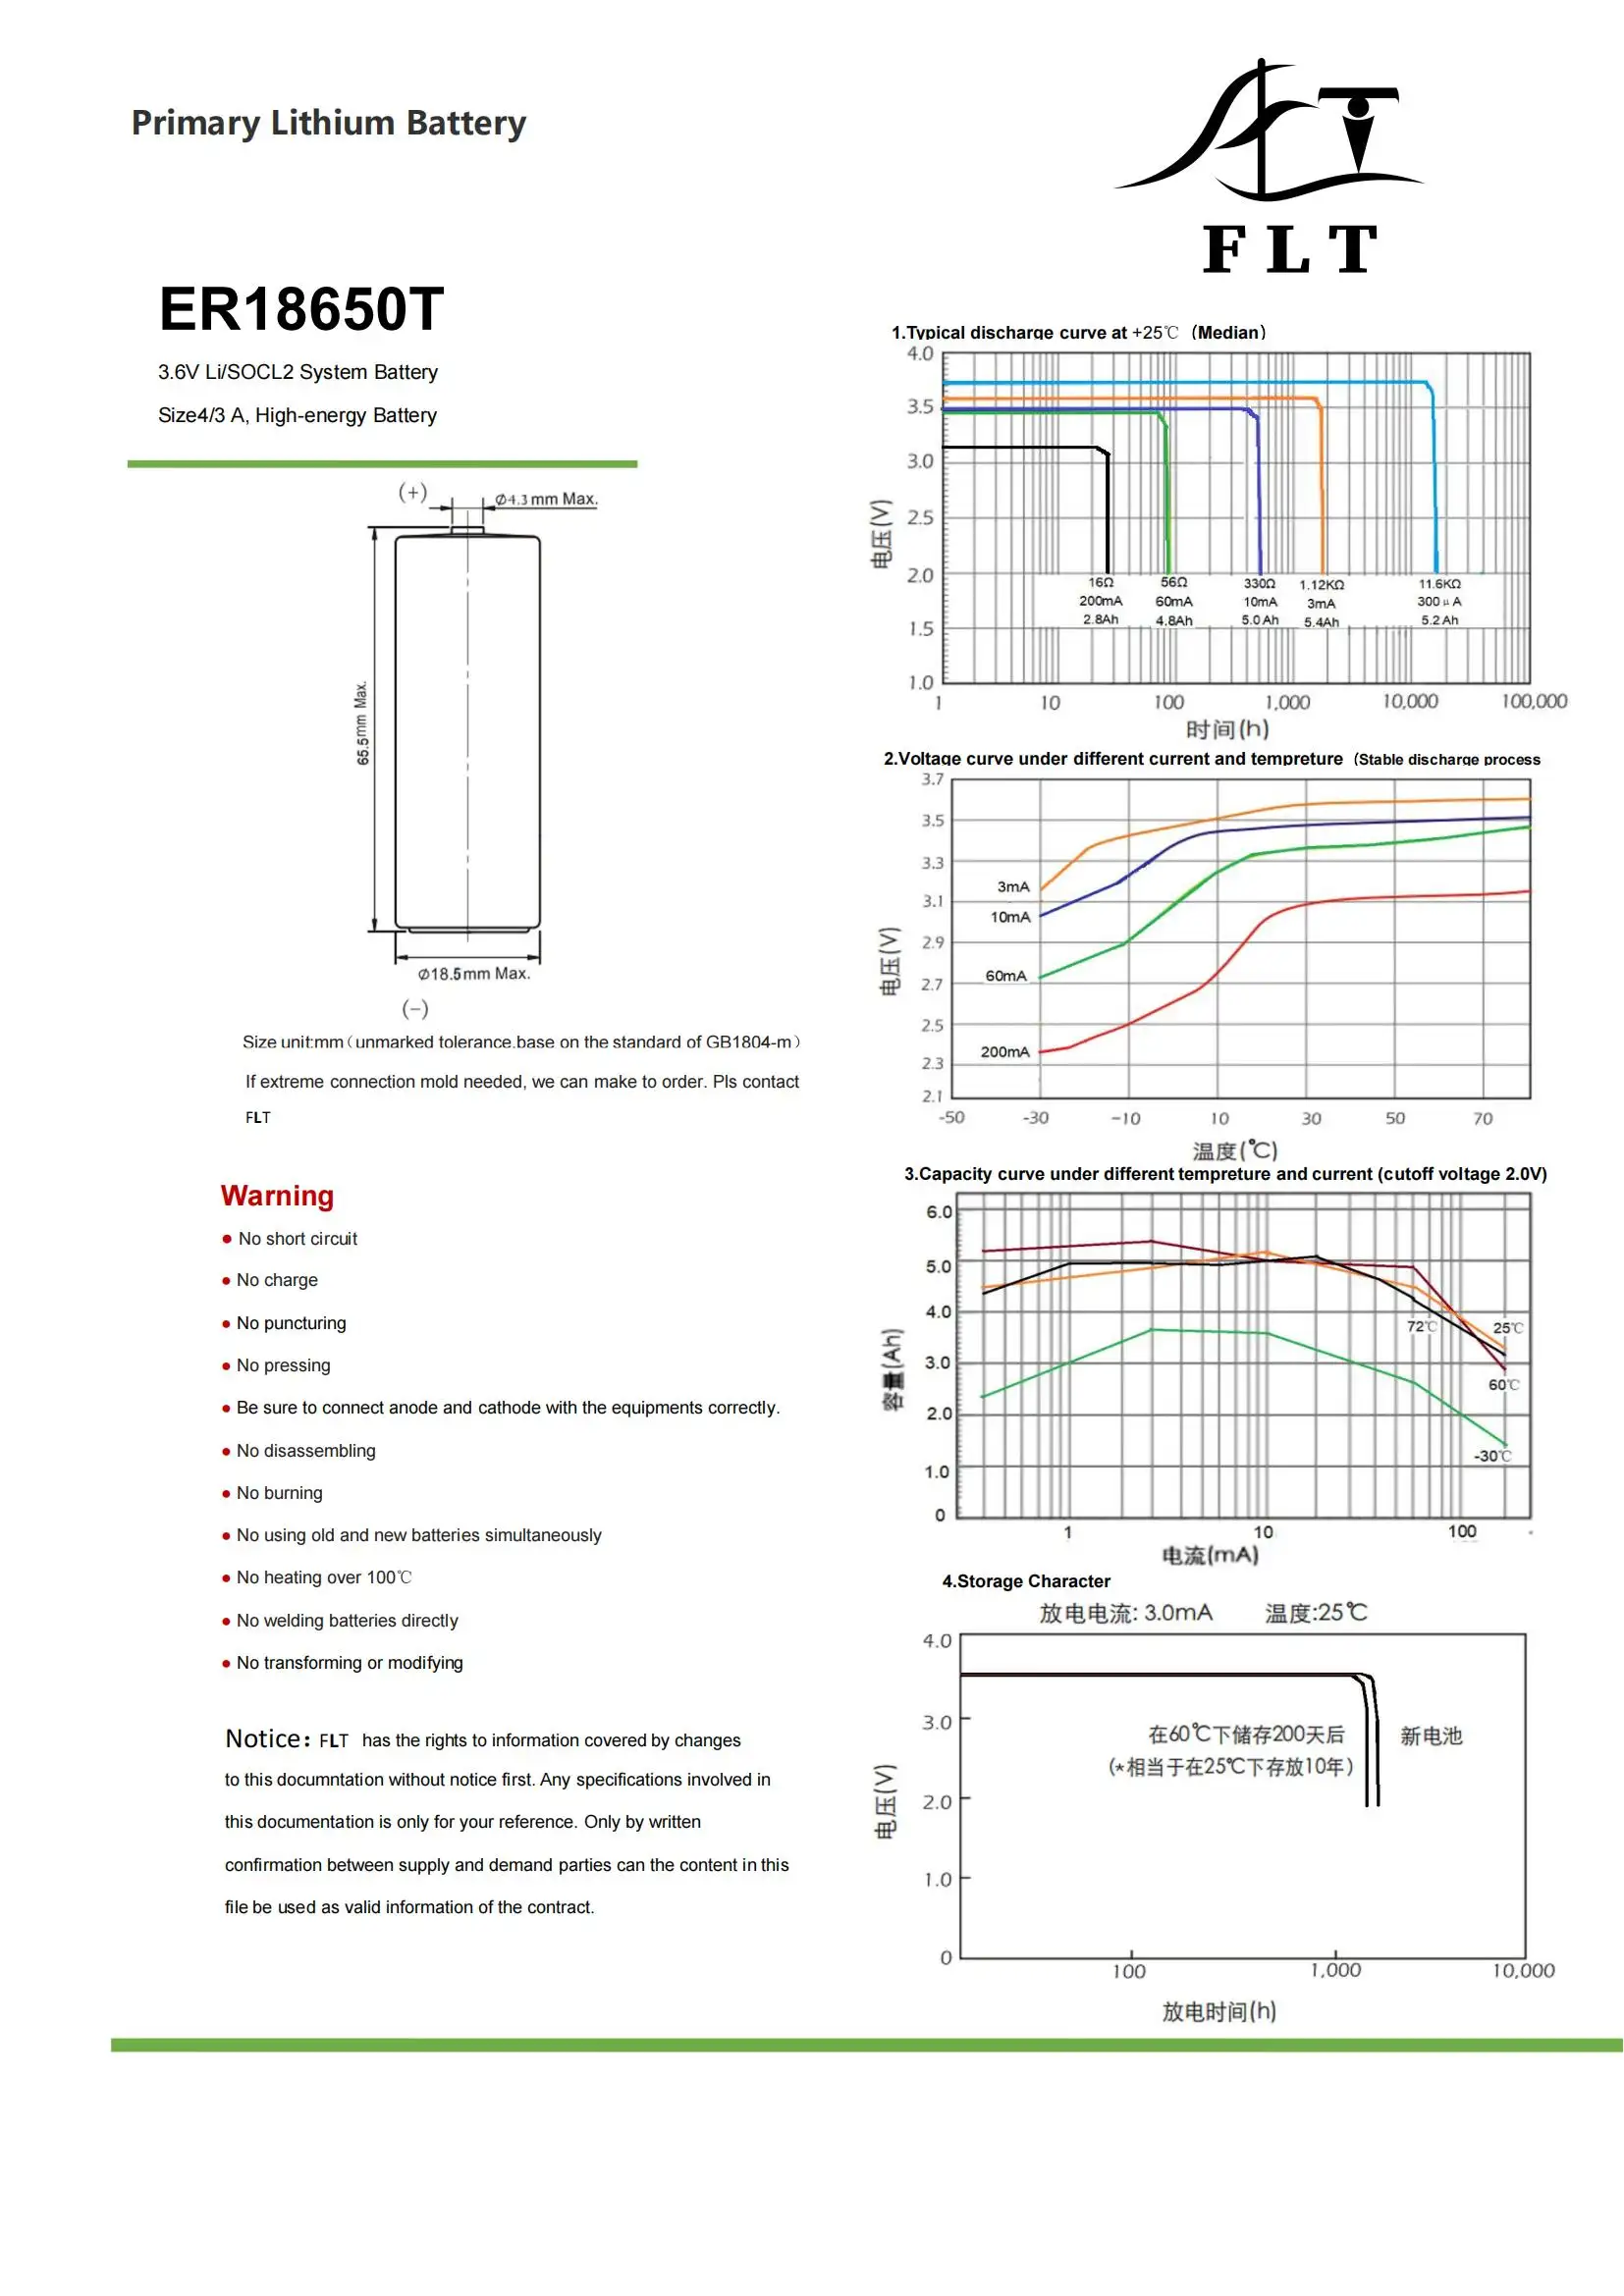 4/3A 3.6V ER18650 litio cloruro di tionile (Li/SOCI2) sismografi 5400 batteria primaria a lunga durata